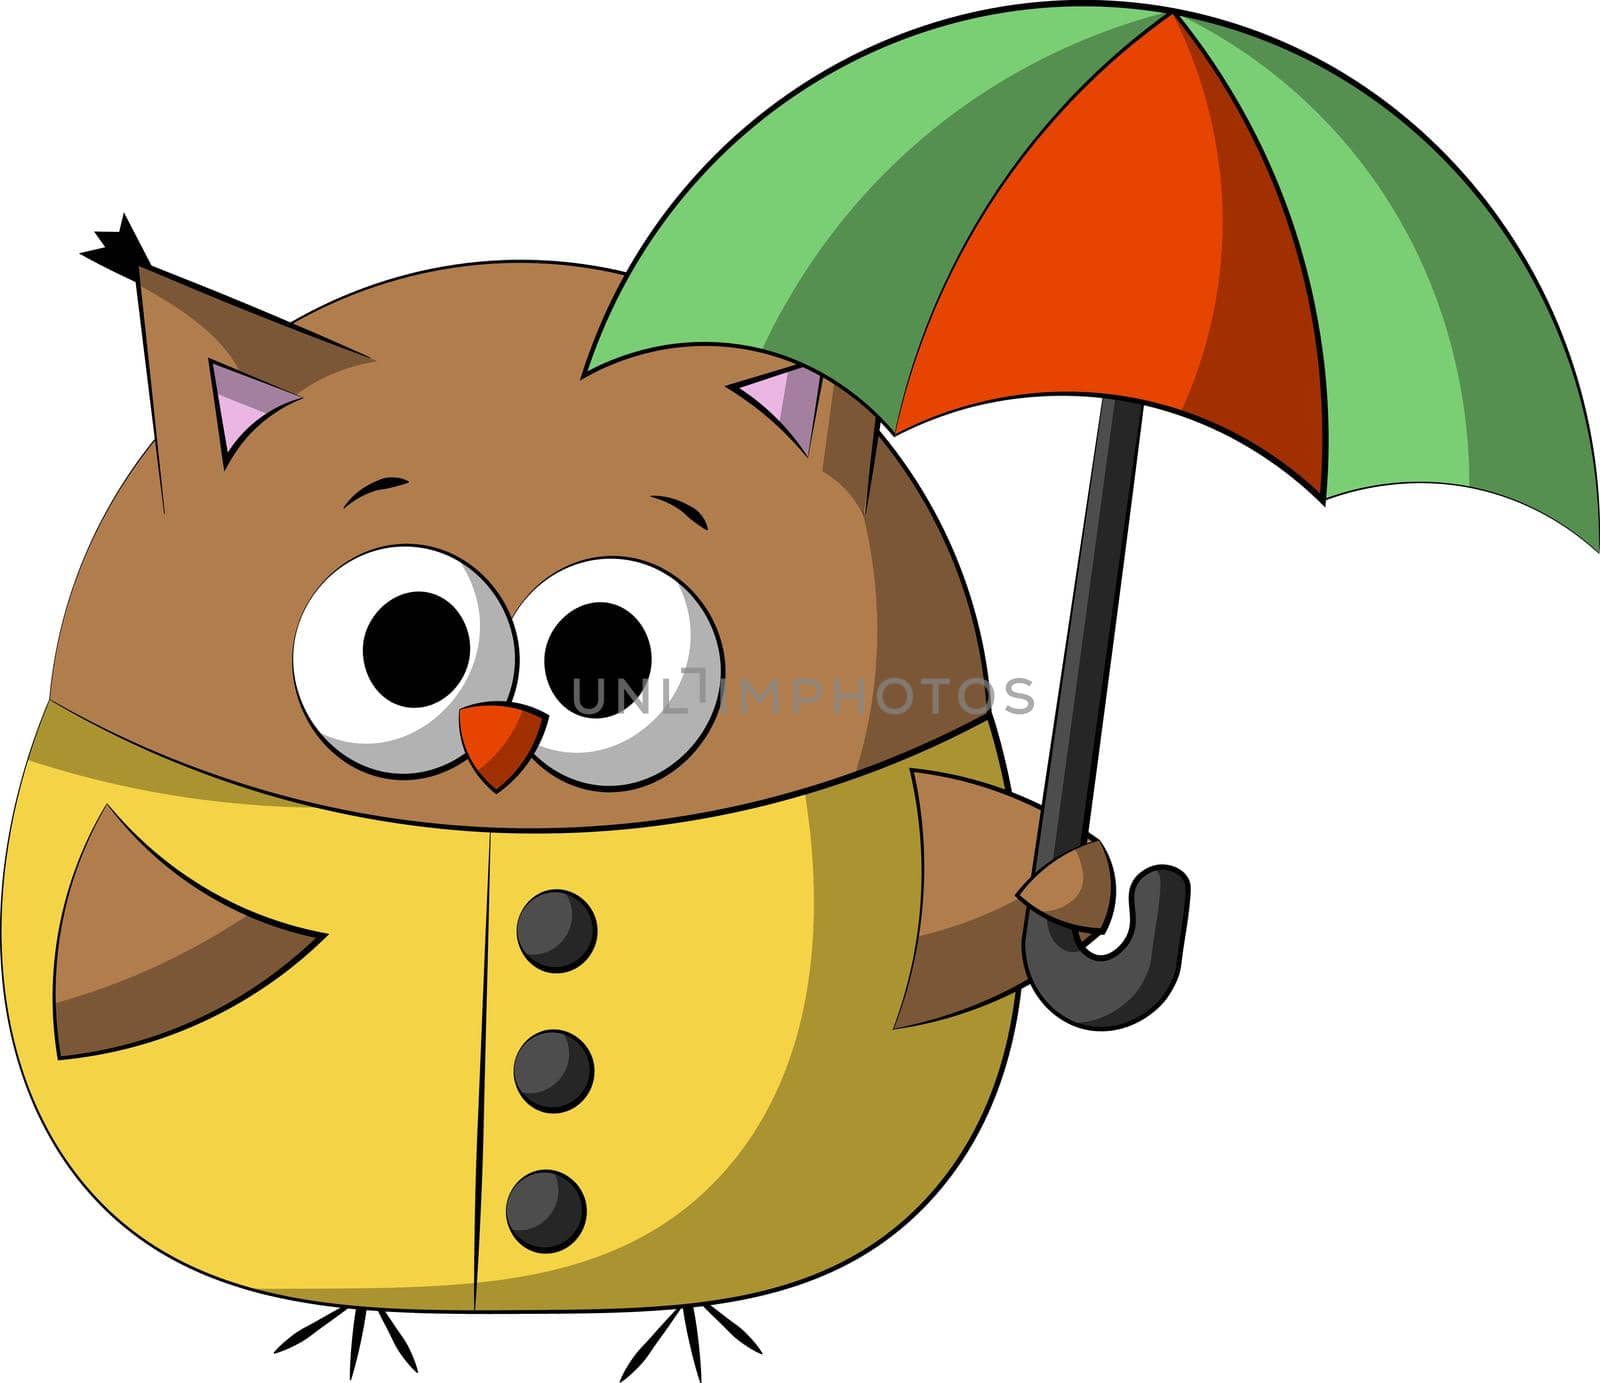 Cute cartoon Owl in raincoat with umbrella. Draw illustration in color by AnastasiaPen